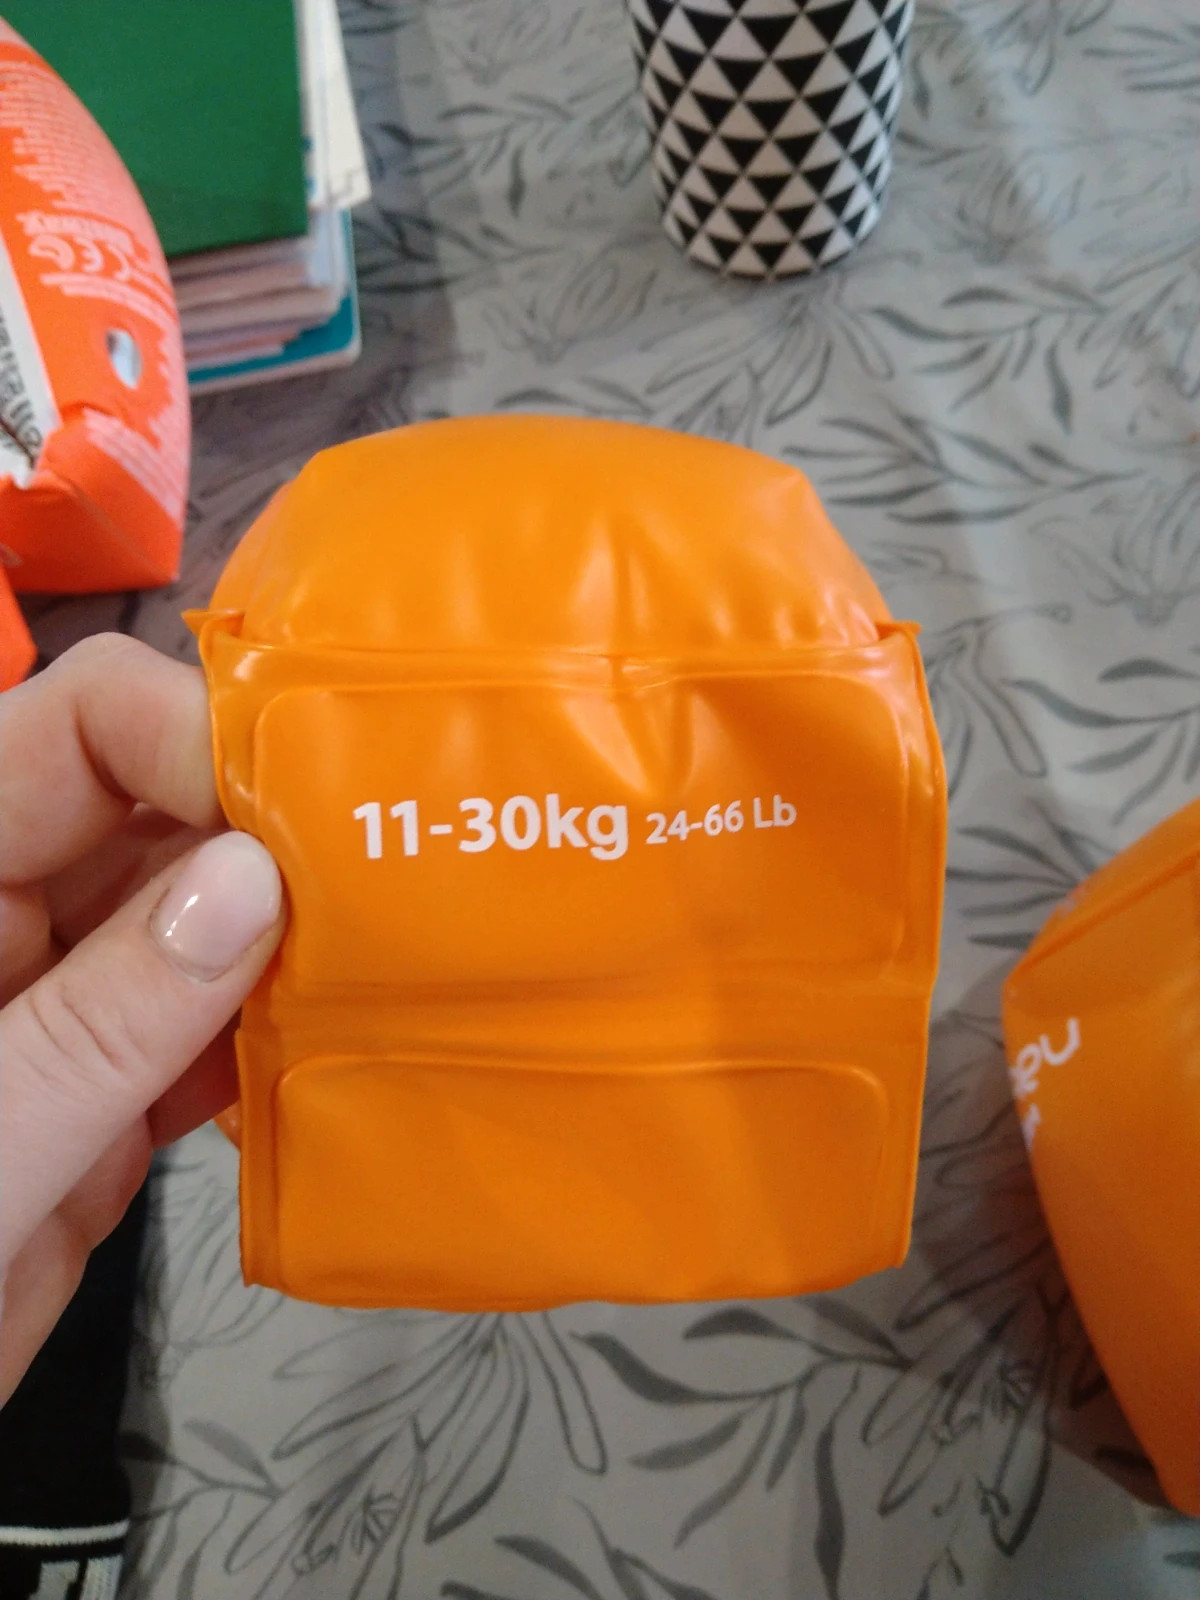 Brassards piscine enfant orange 11-30 kg - Maroc, achat en ligne